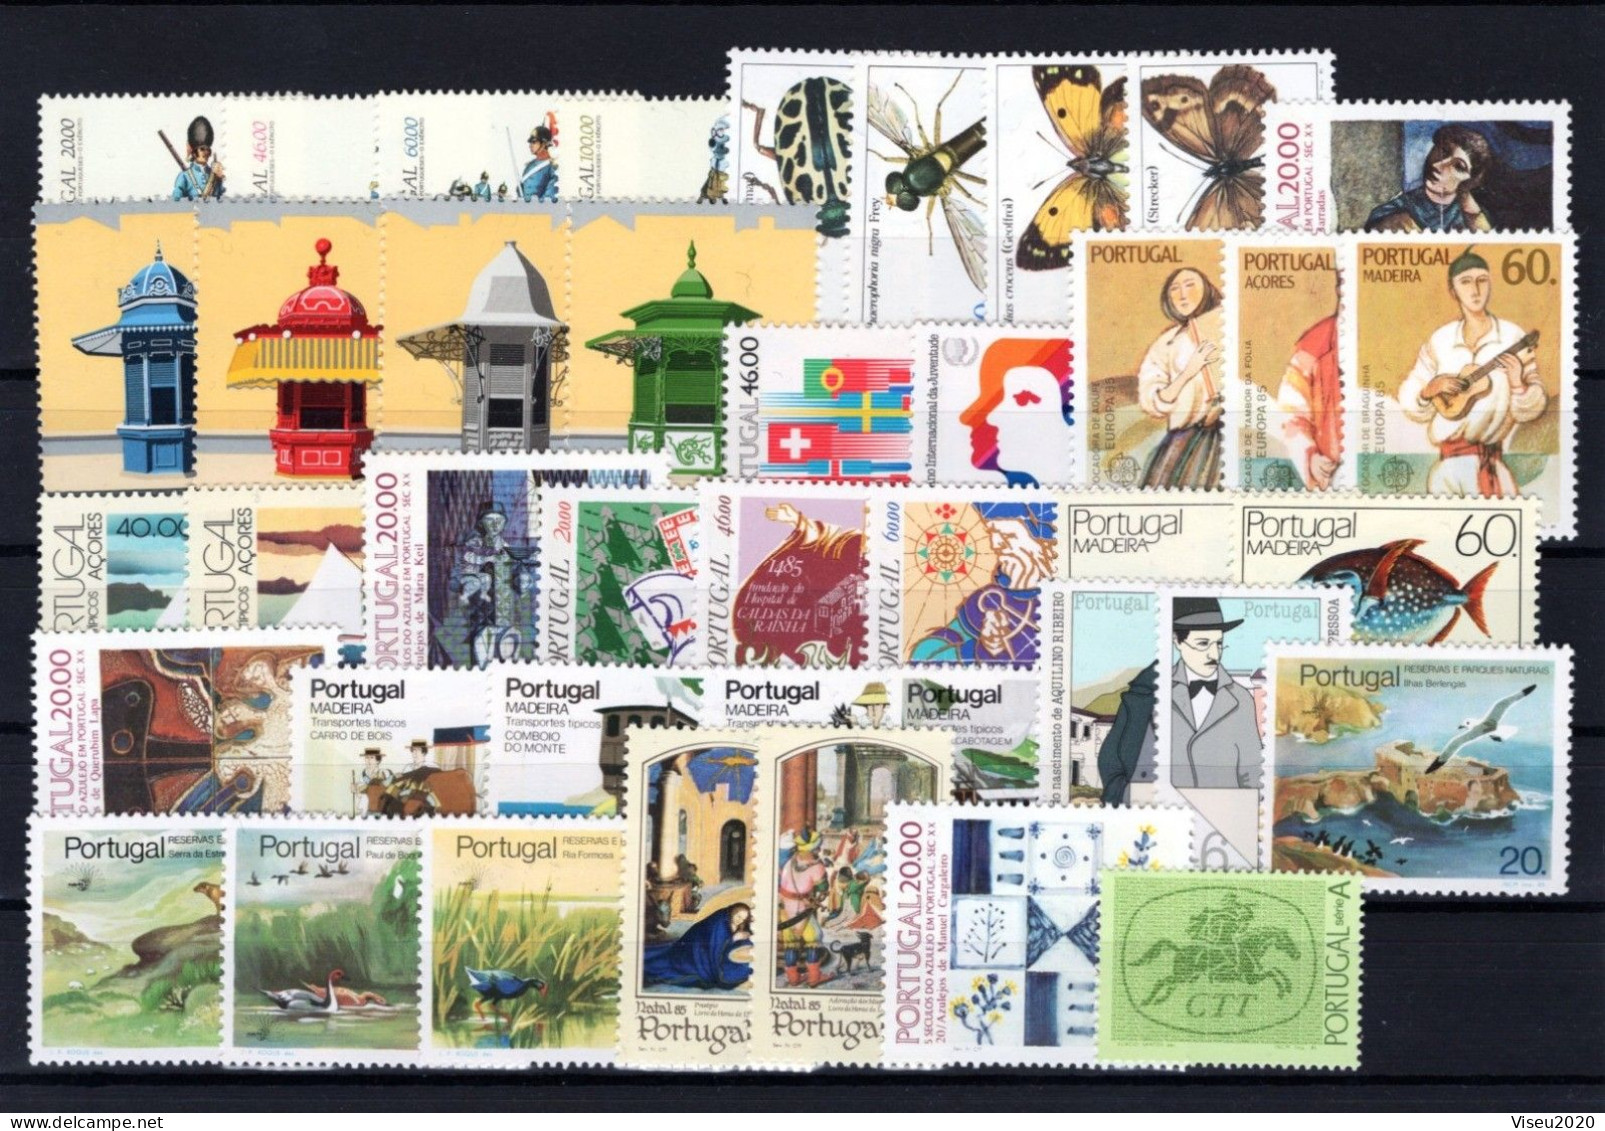 1985 Portugal Azores Madeira Complete Year MNH Stamps. Année Compléte NeufSansCharnière. Ano Completo Novo Sem Charneira - Années Complètes